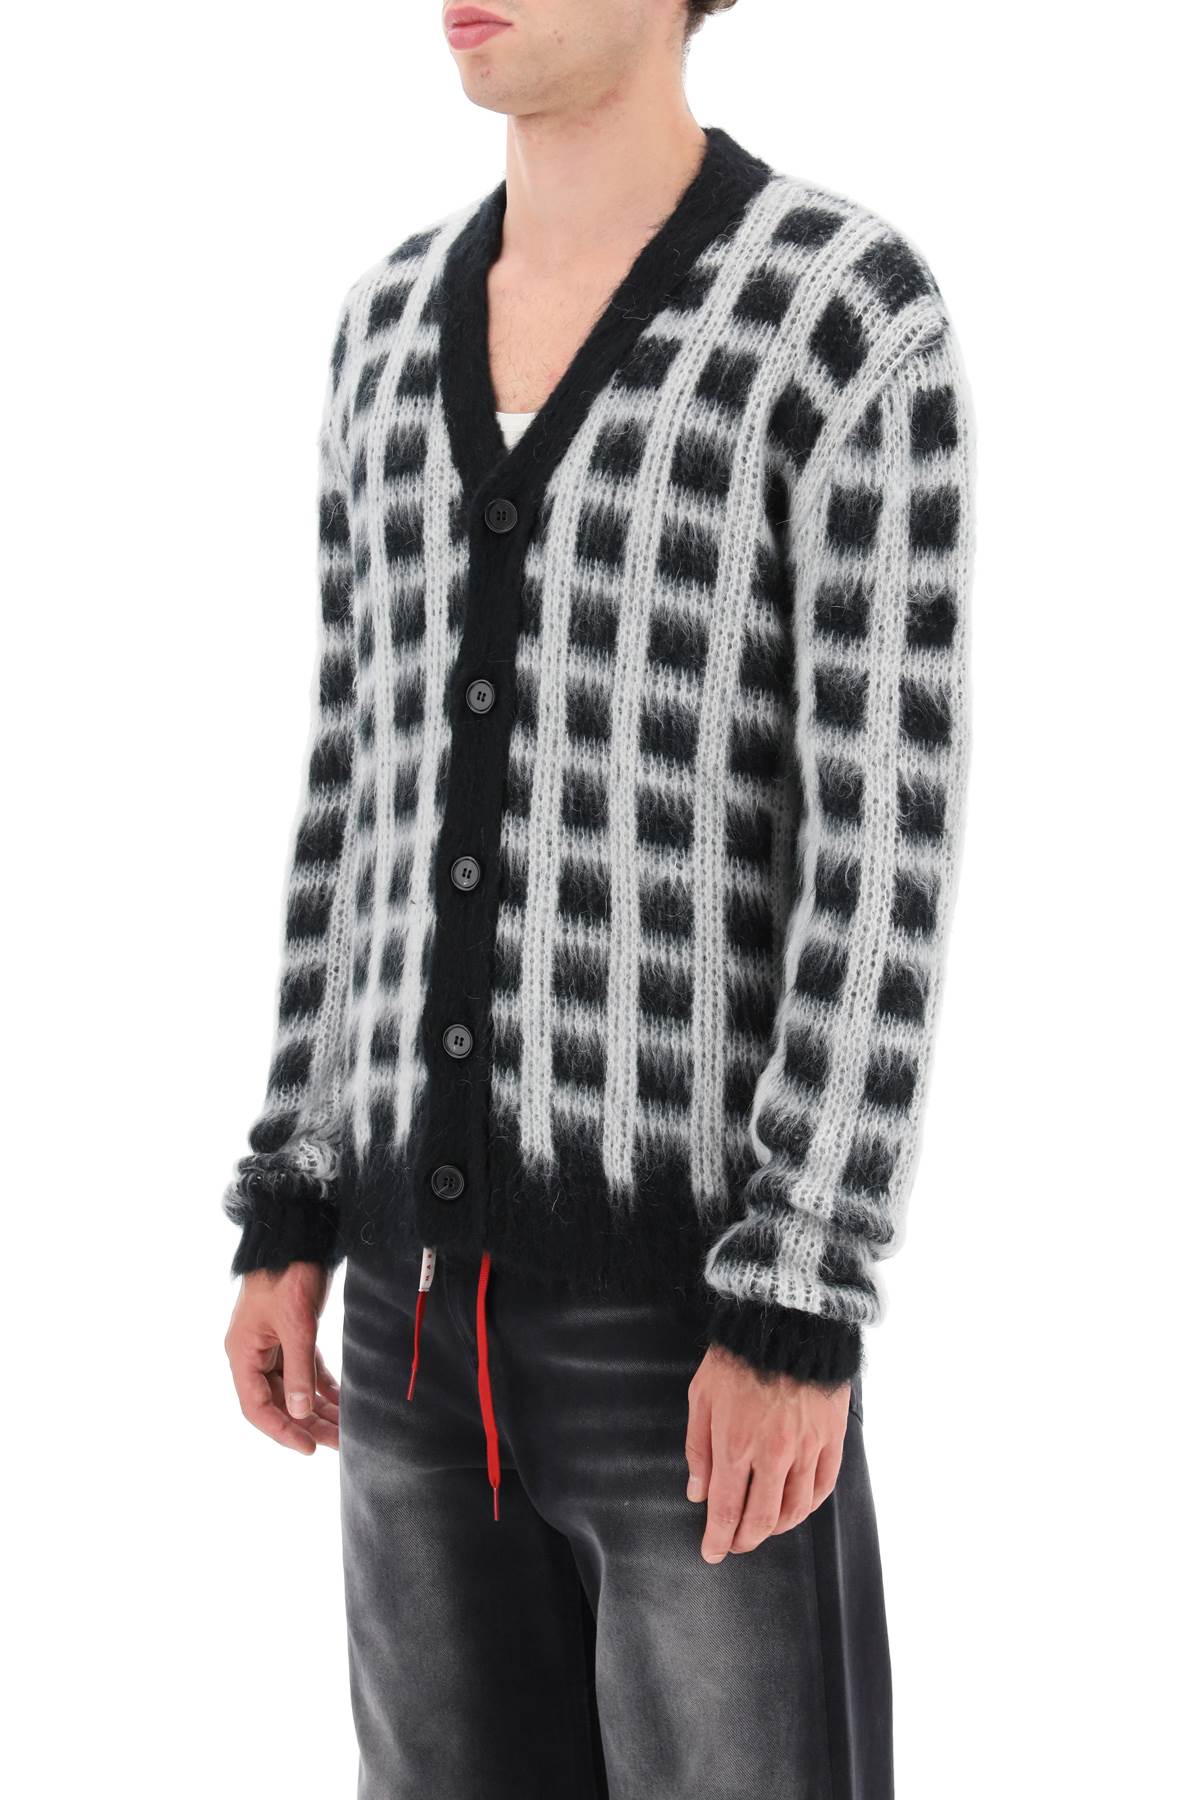 Marni brushed-yarn cardigan with check pattern-3